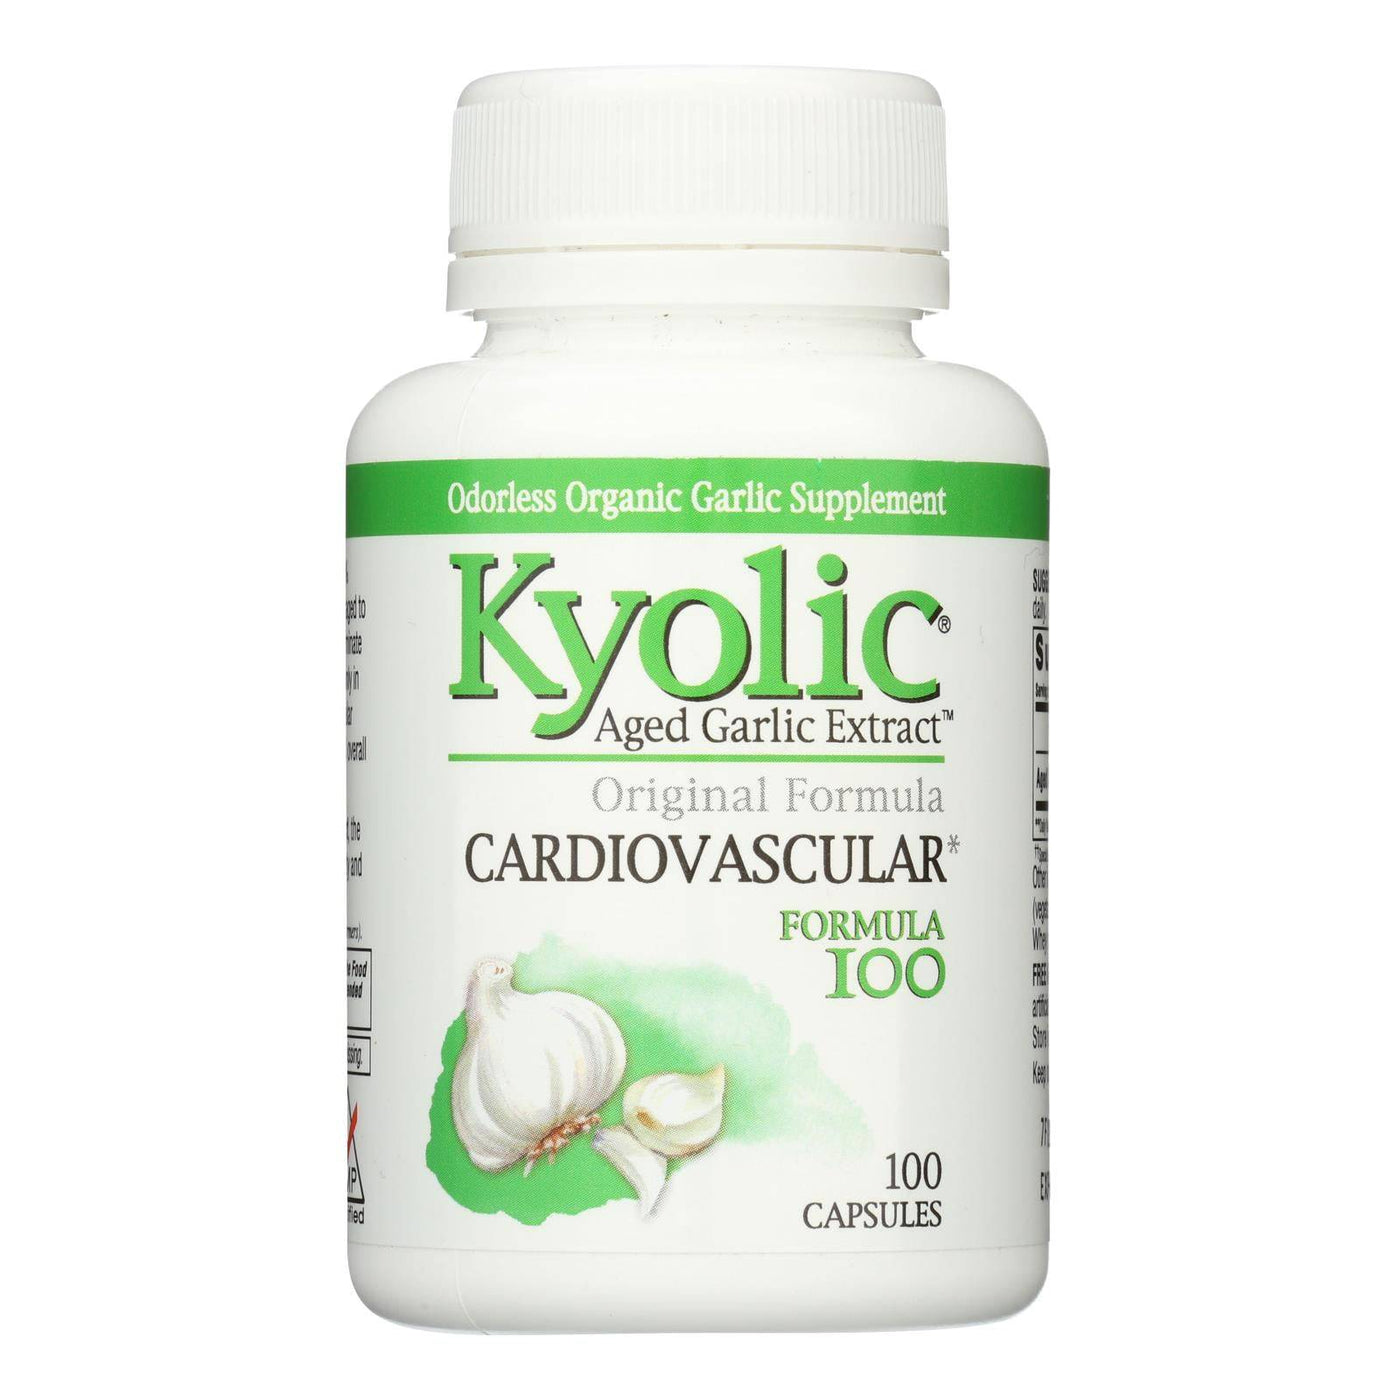 Buy Kyolic - Aged Garlic Extract Hi-po Cardiovascular Original Formula 100 - 100 Capsules  at OnlyNaturals.us